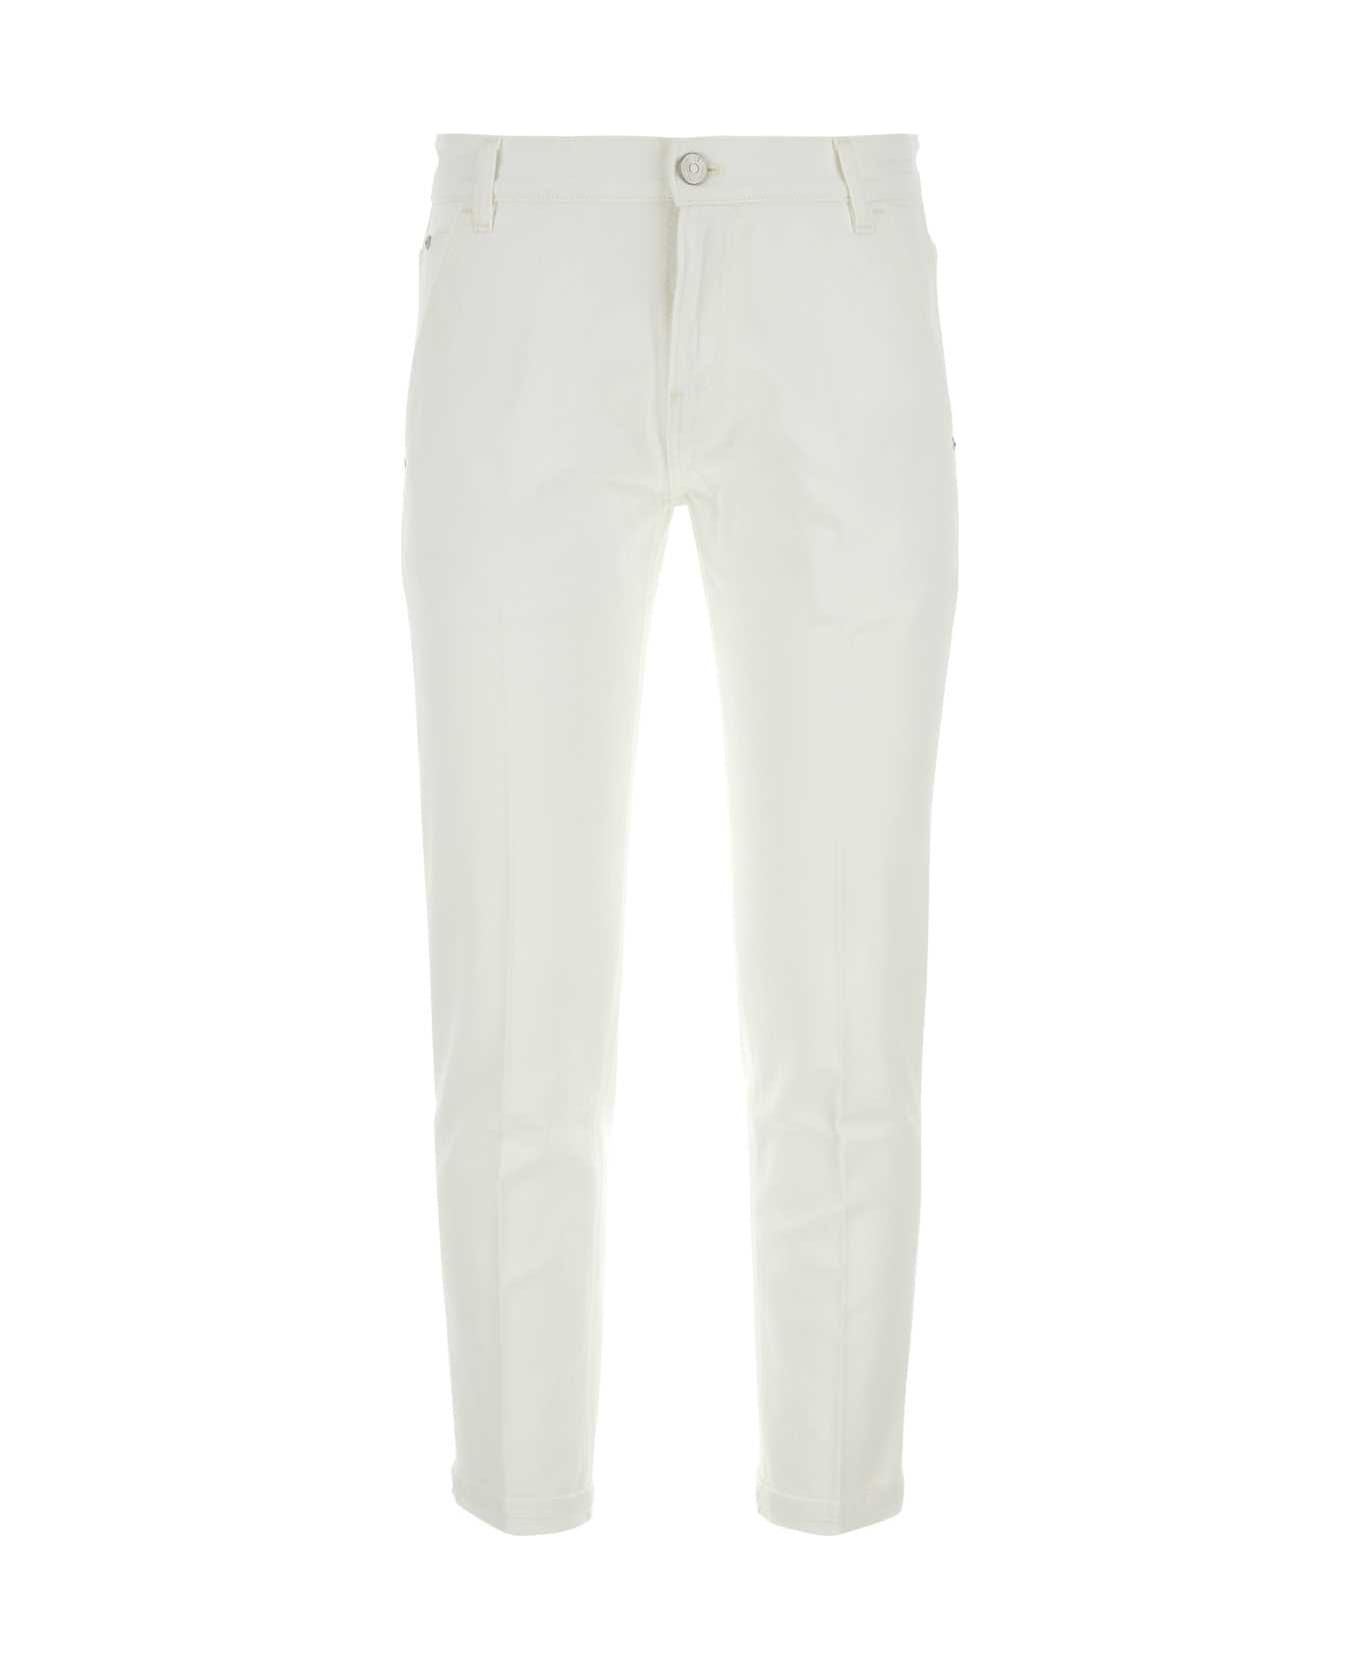 PT Torino White Stretch Denim Indie Jeans - BIANCO デニム